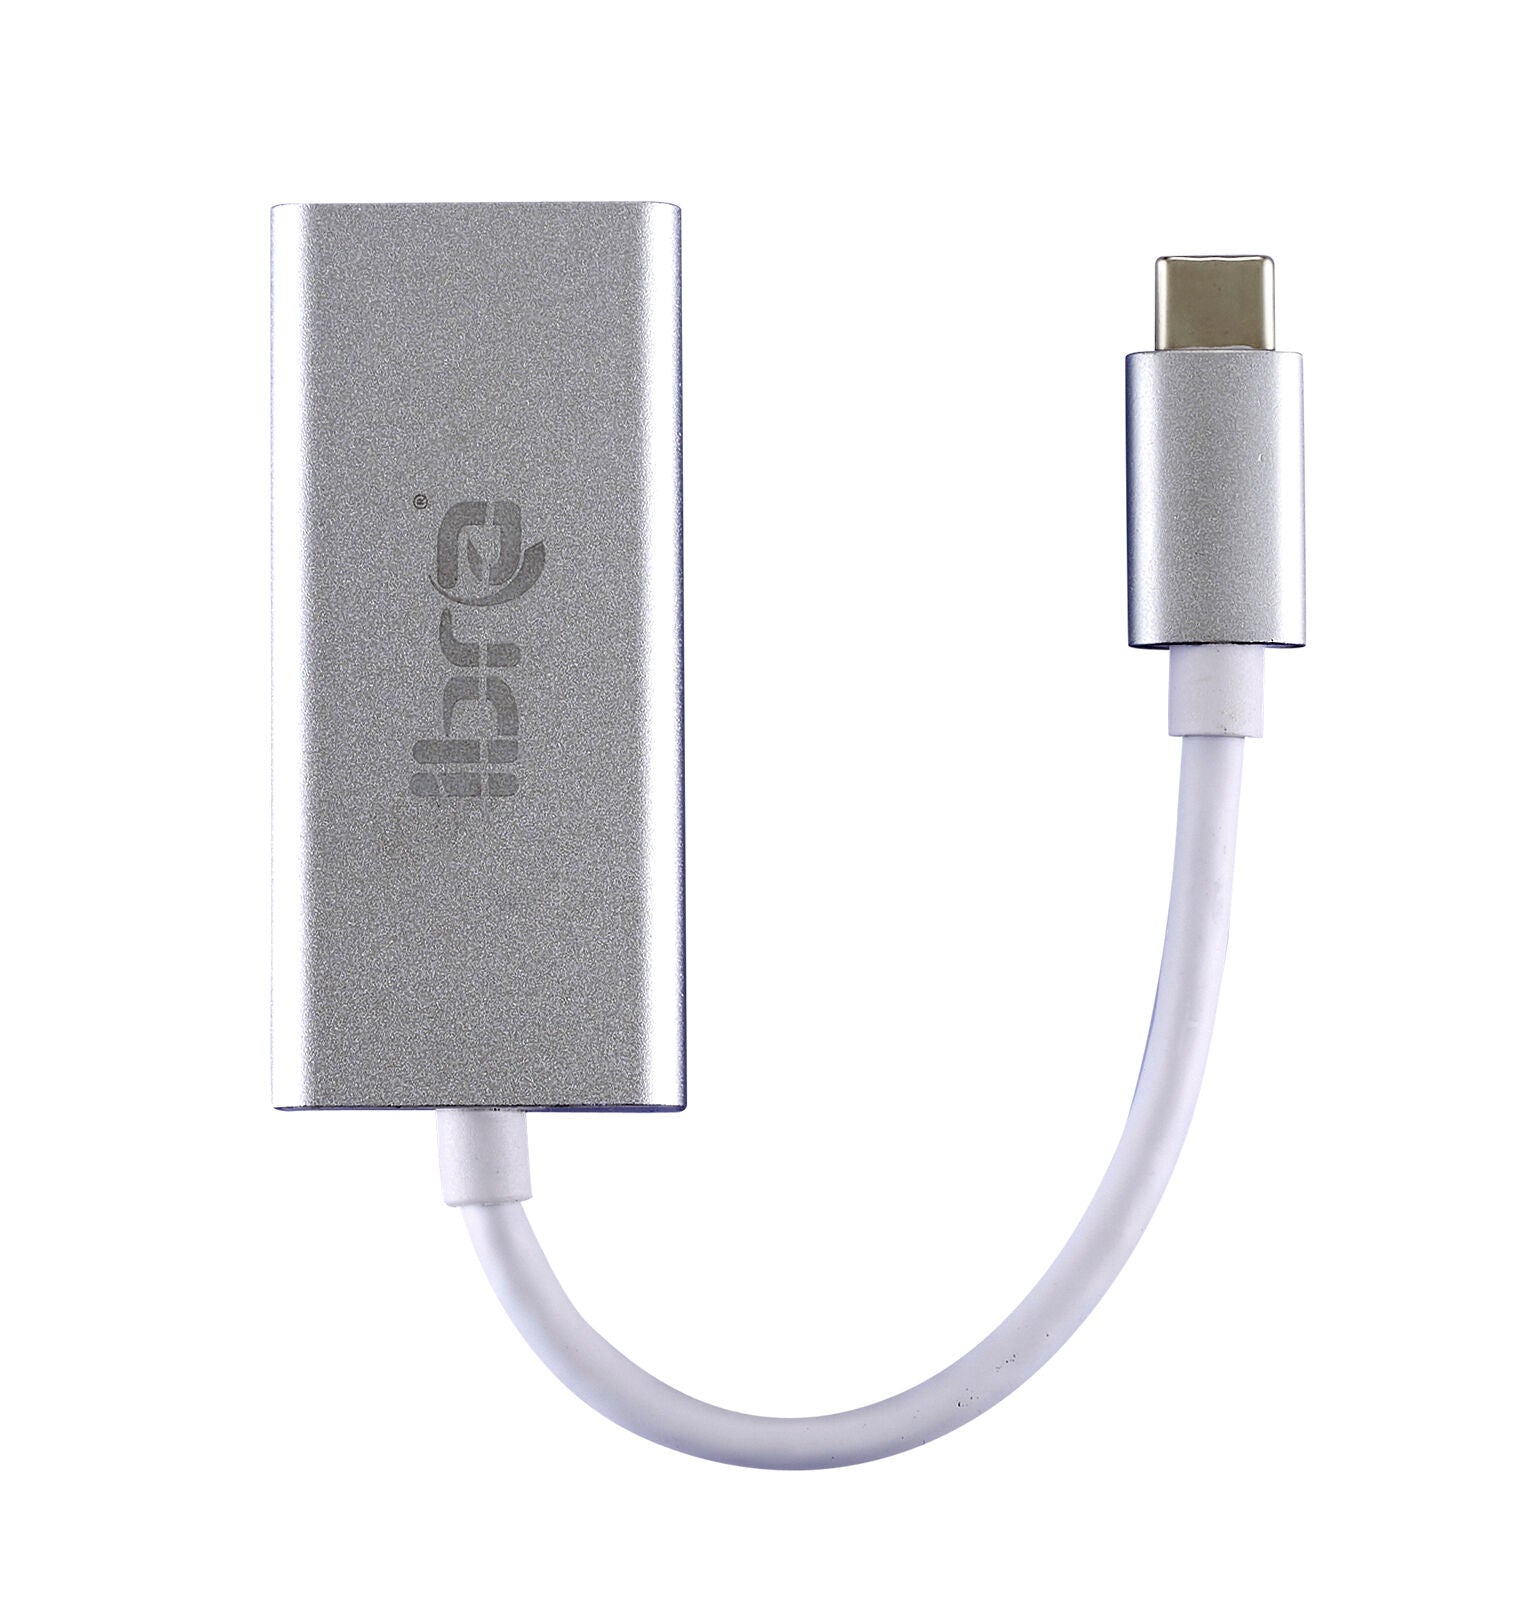 USB 3.1 Type C to RJ45 Gigabit Ethernet Adapter for Apple Macbook - 0.15M